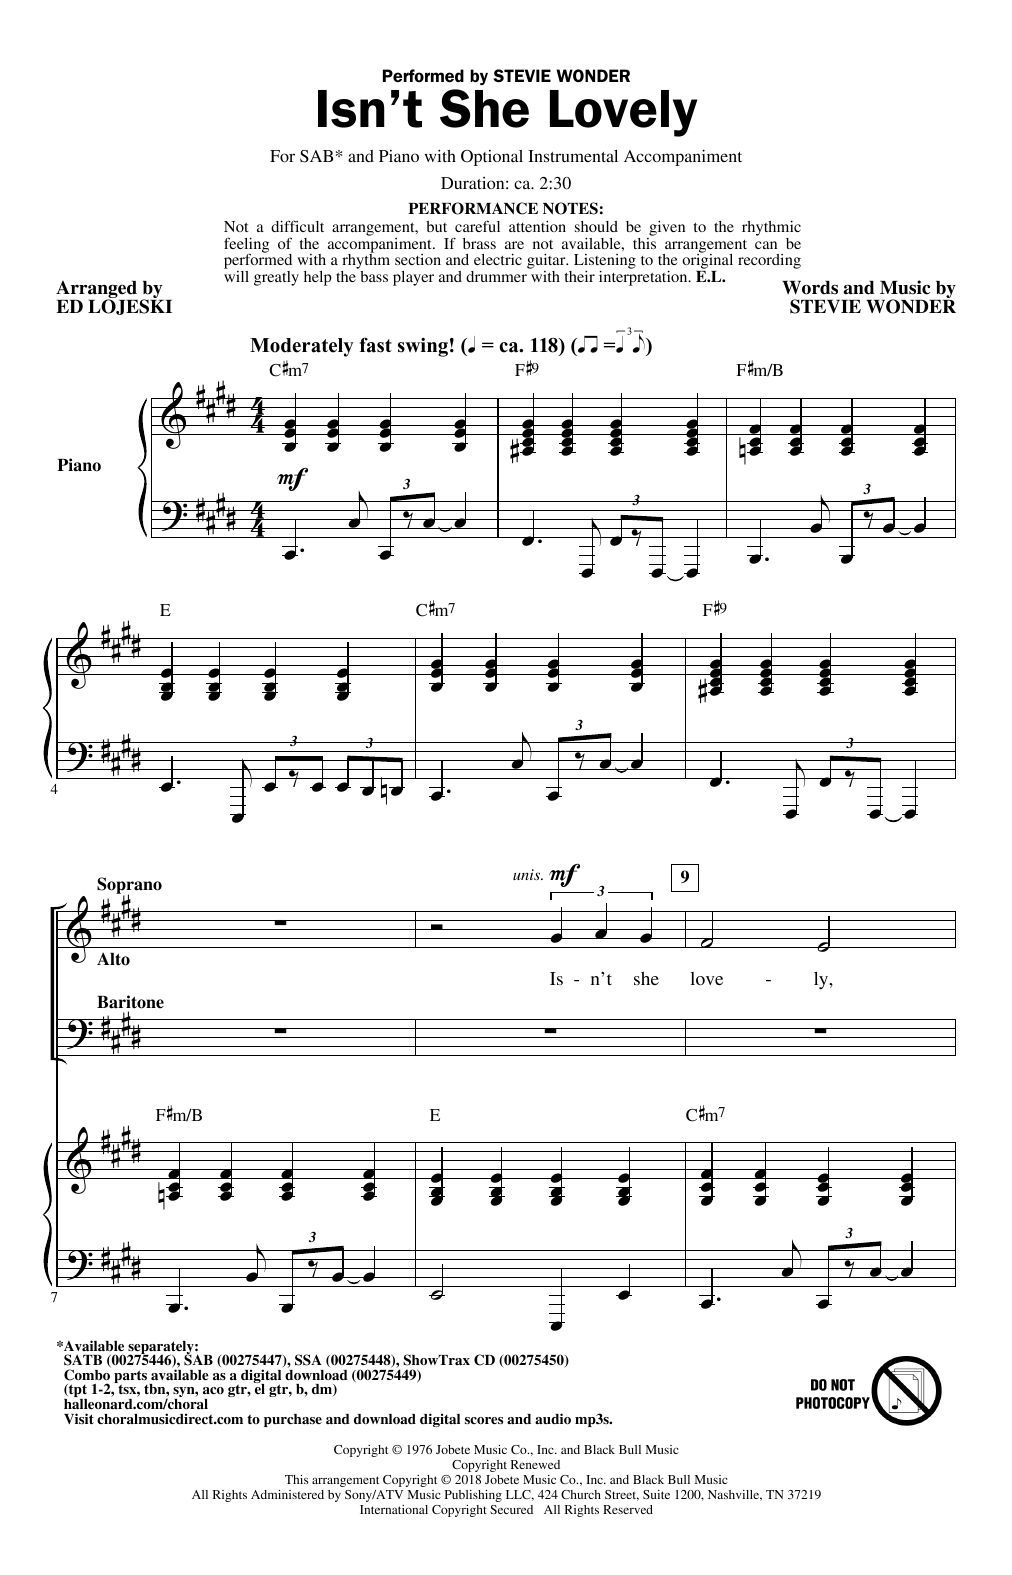 Stevie Wonder Isn't She Lovely (arr. Ed Lojeski) Sheet Music Notes & Chords for 2-Part Choir - Download or Print PDF